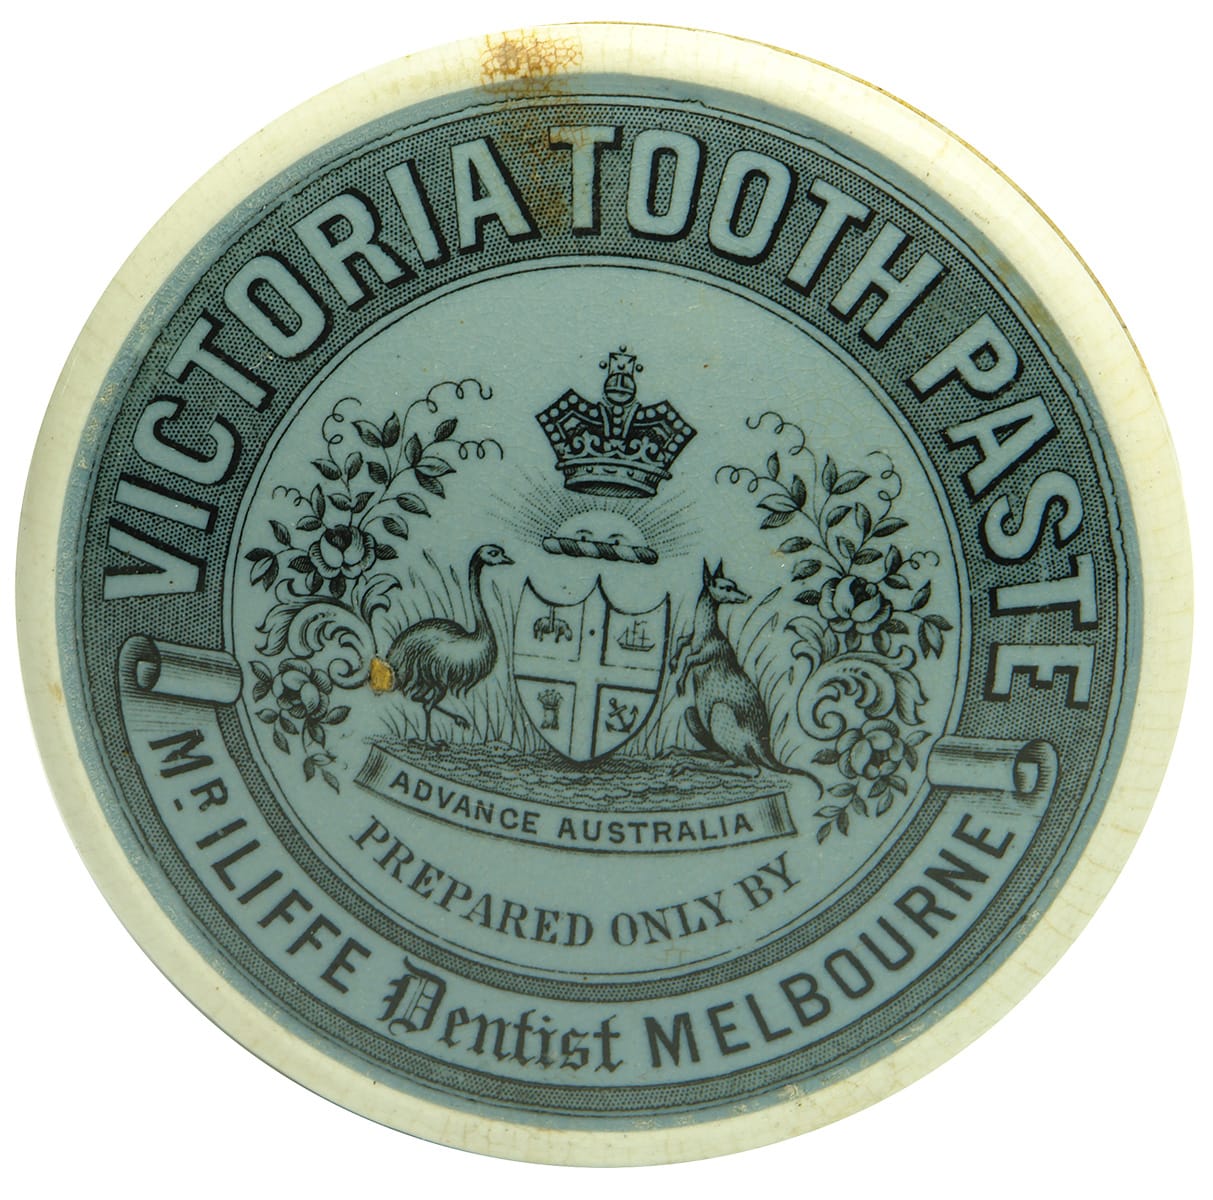 Victoria Tooth Paste Iliffe Dentist Melbourne Pot Lid